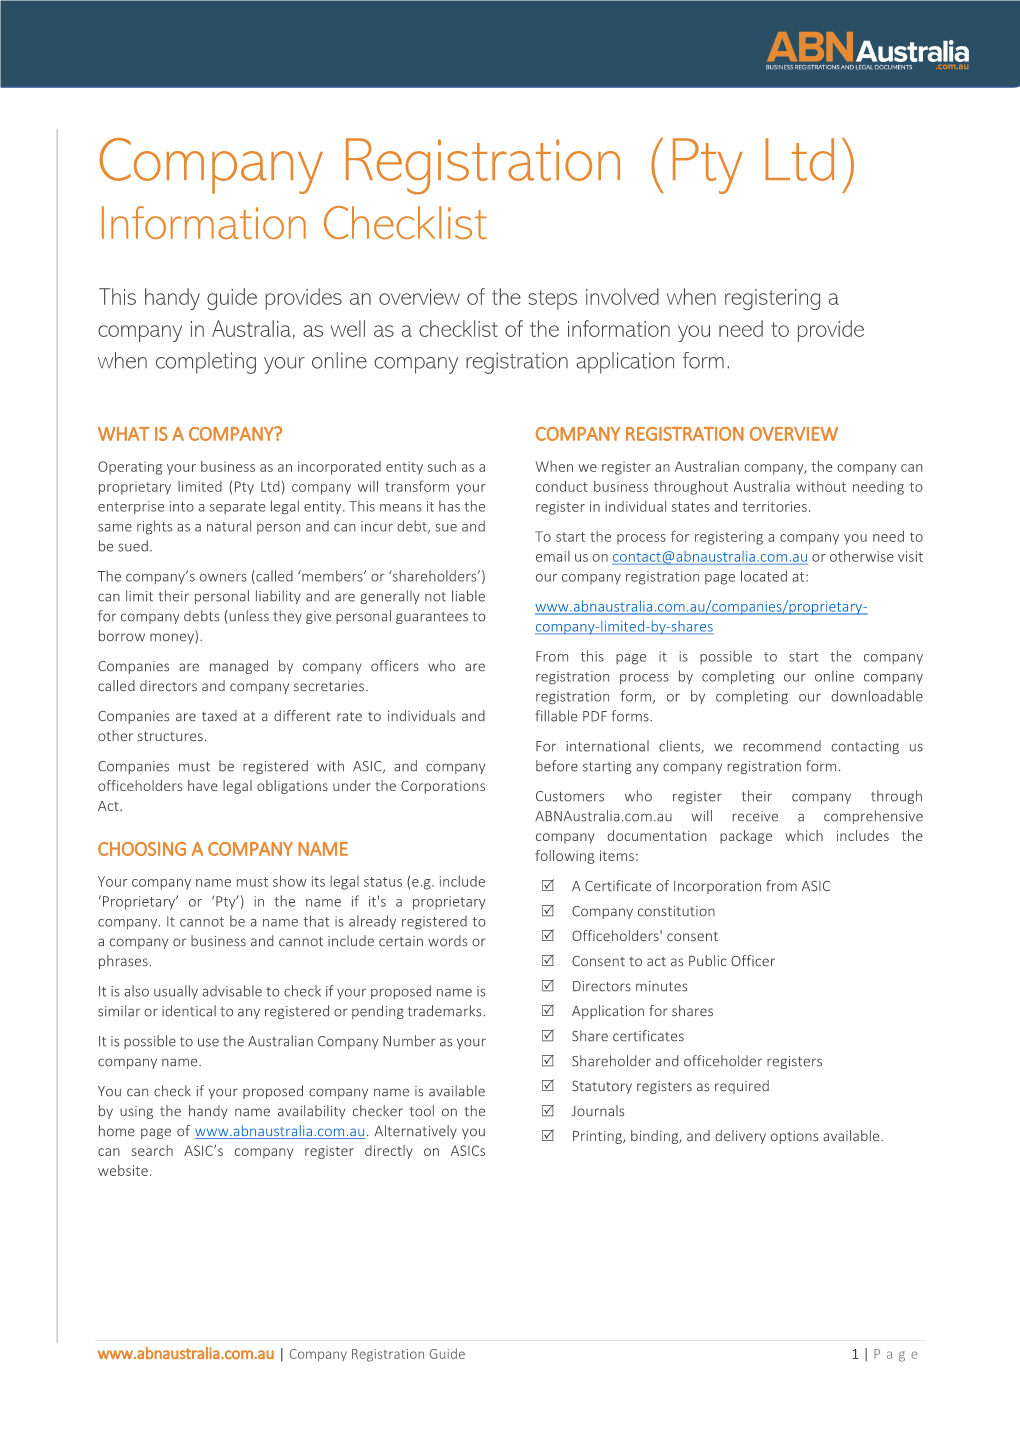 Company Registration (Pty Ltd) Information Checklist